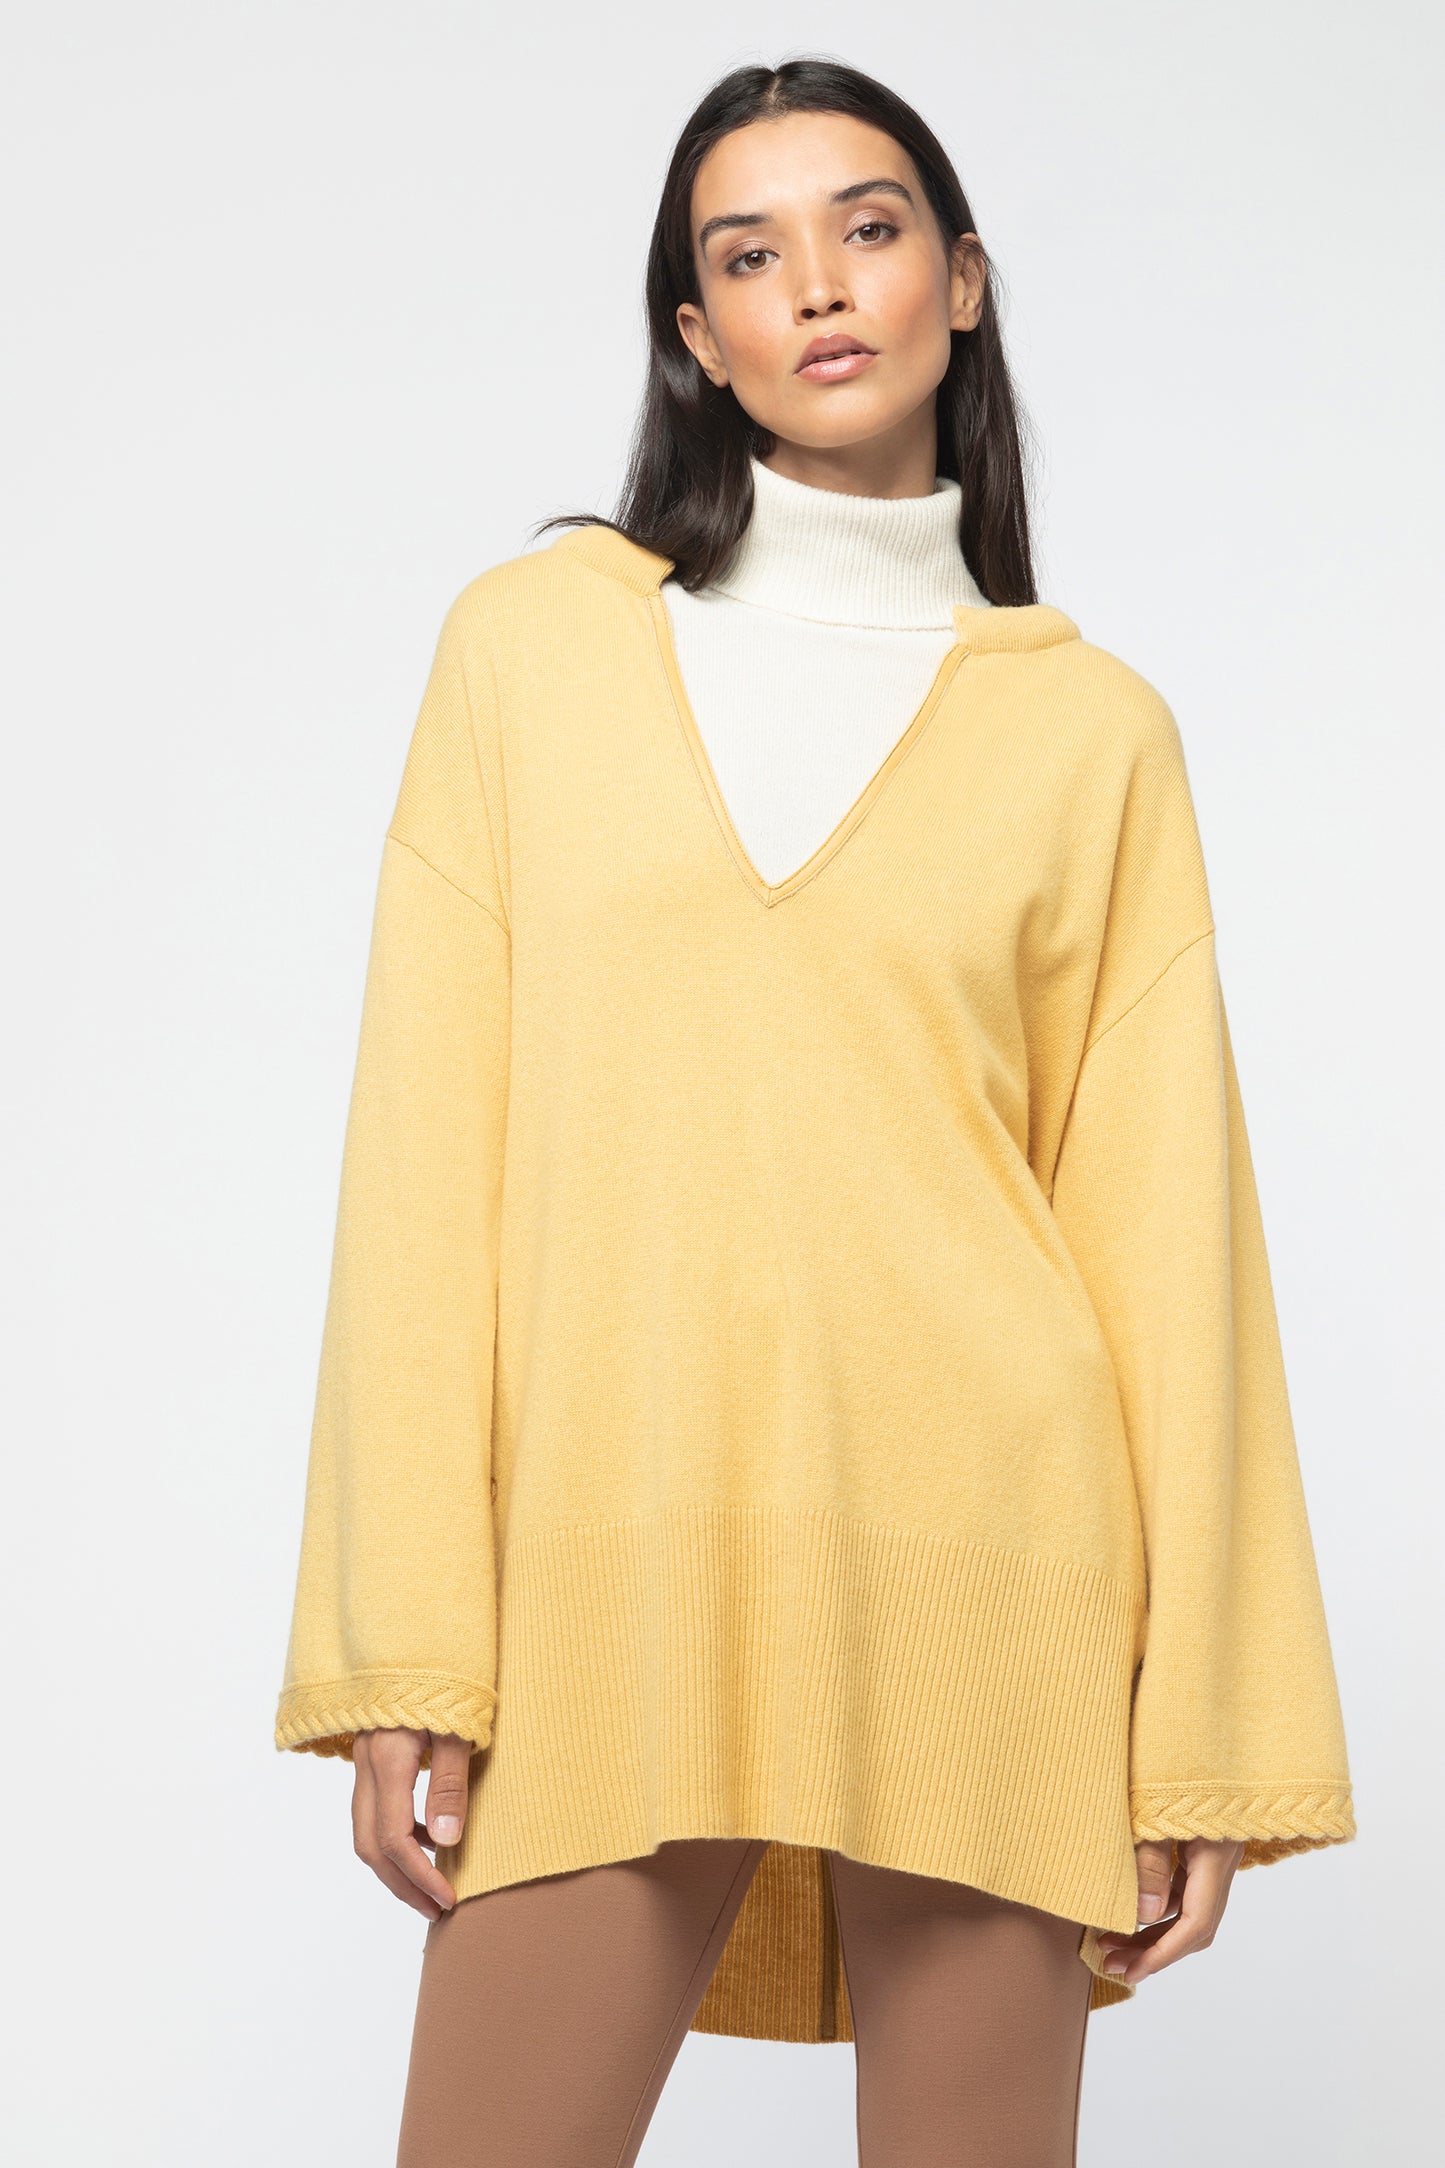 SYDNEY saffron cashmere sweater